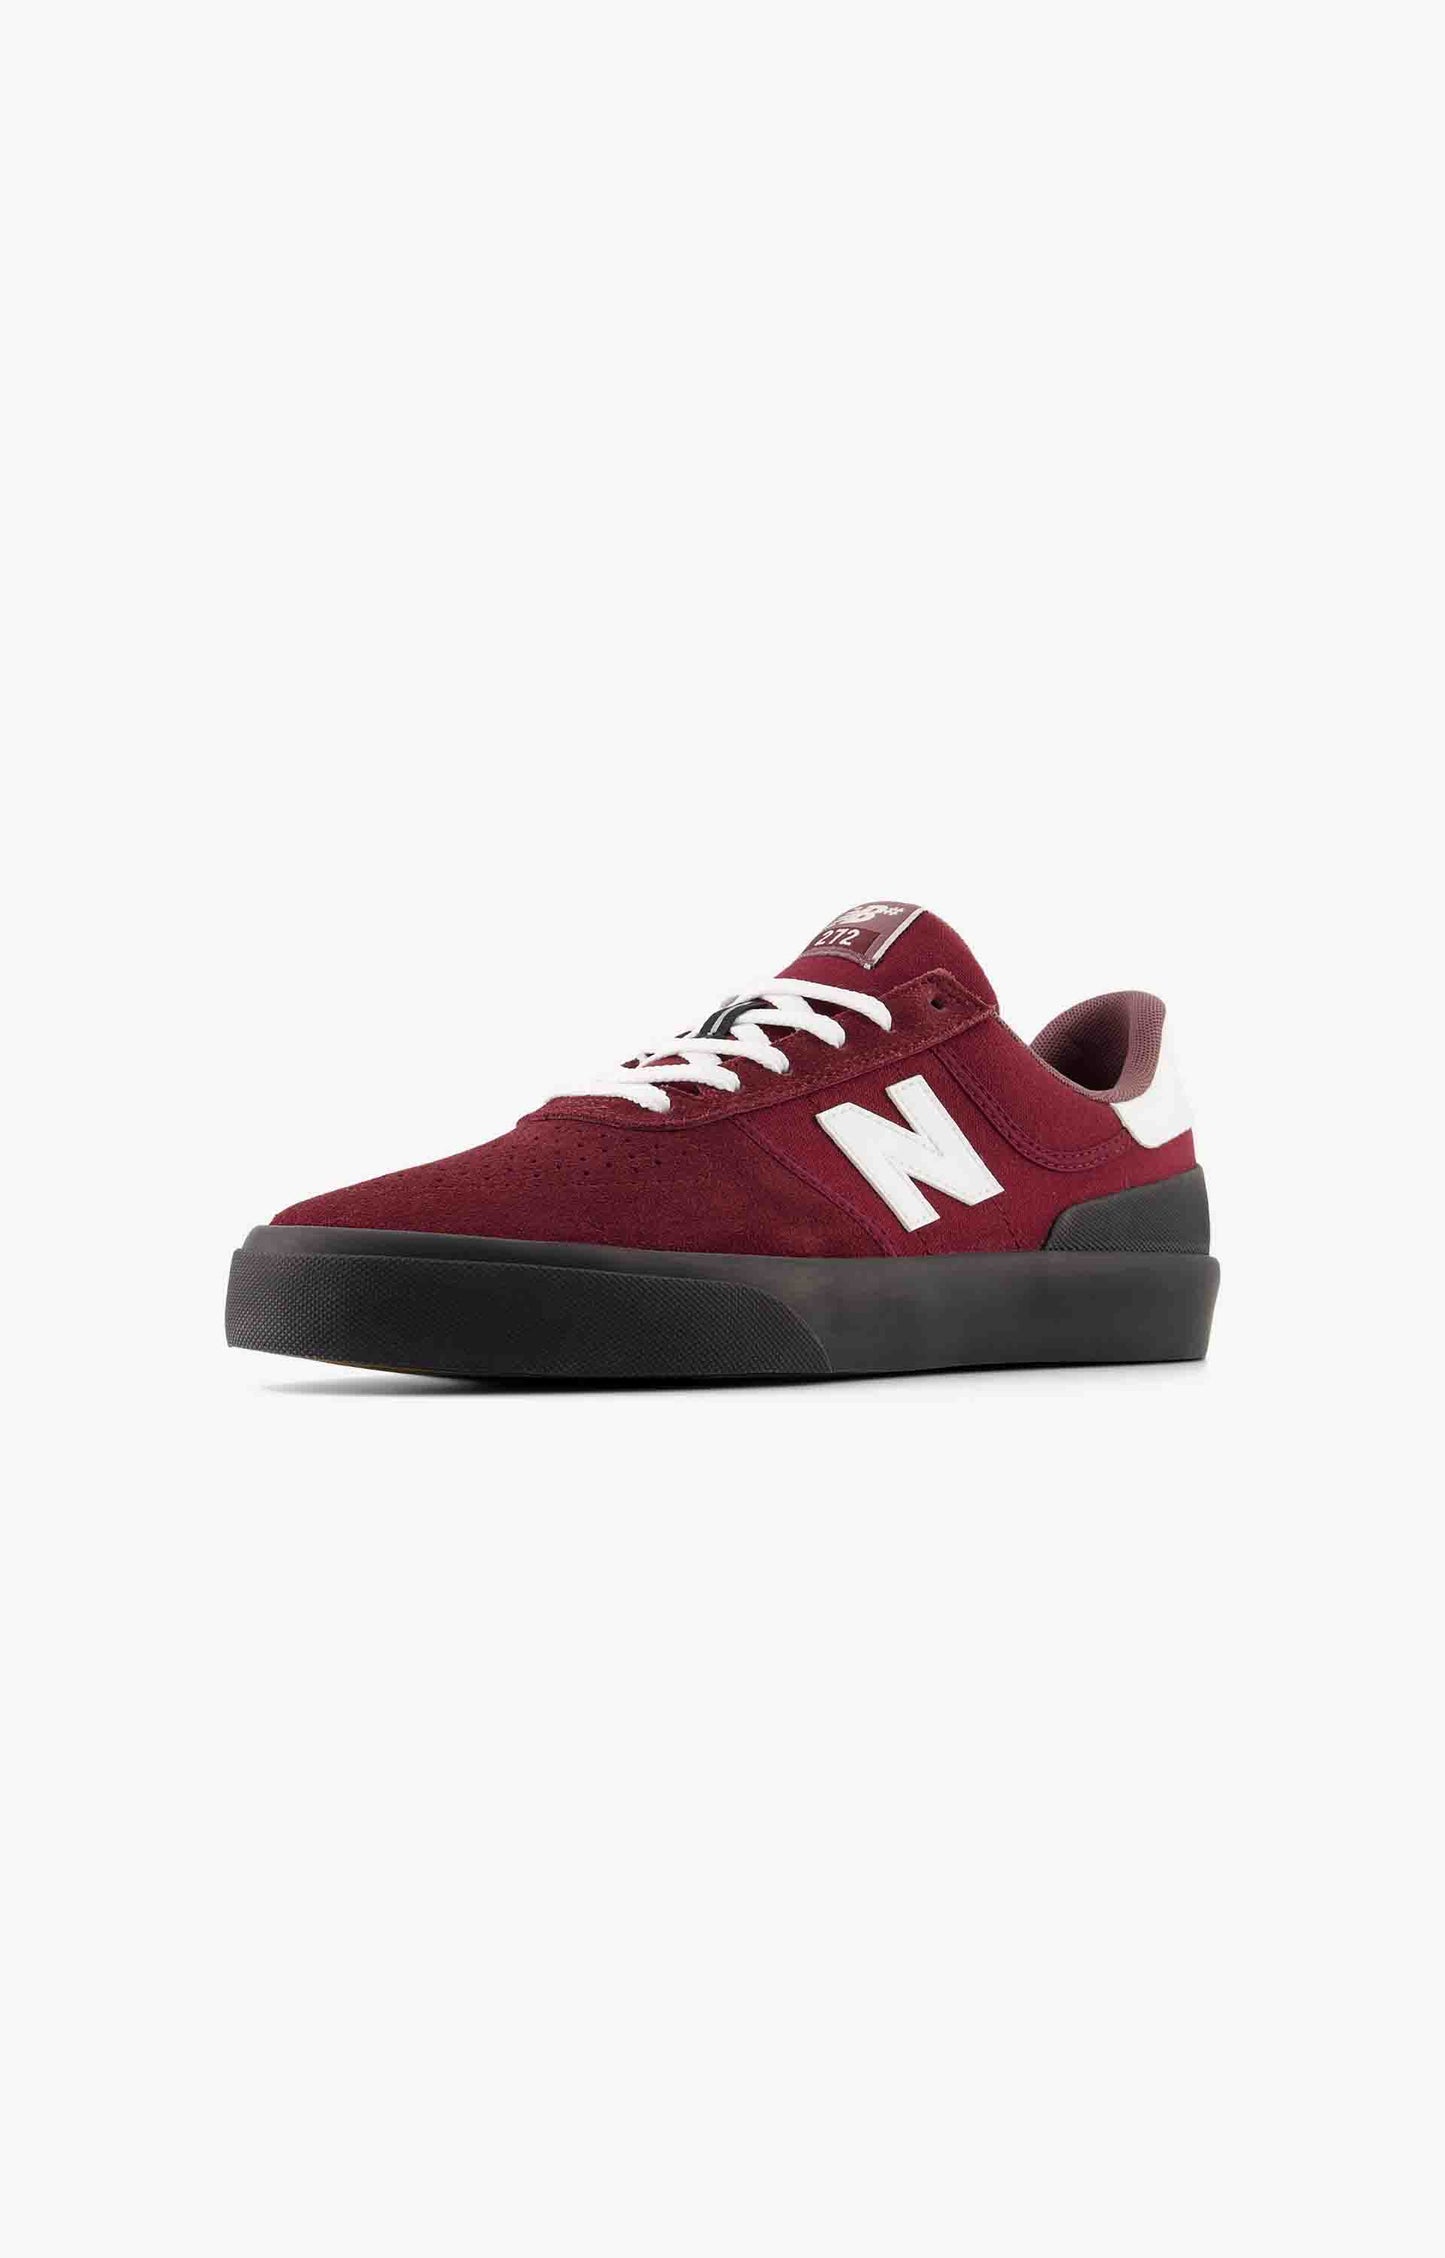 New Balance Numeric NM272BNB Shoe, Burgundy/Black